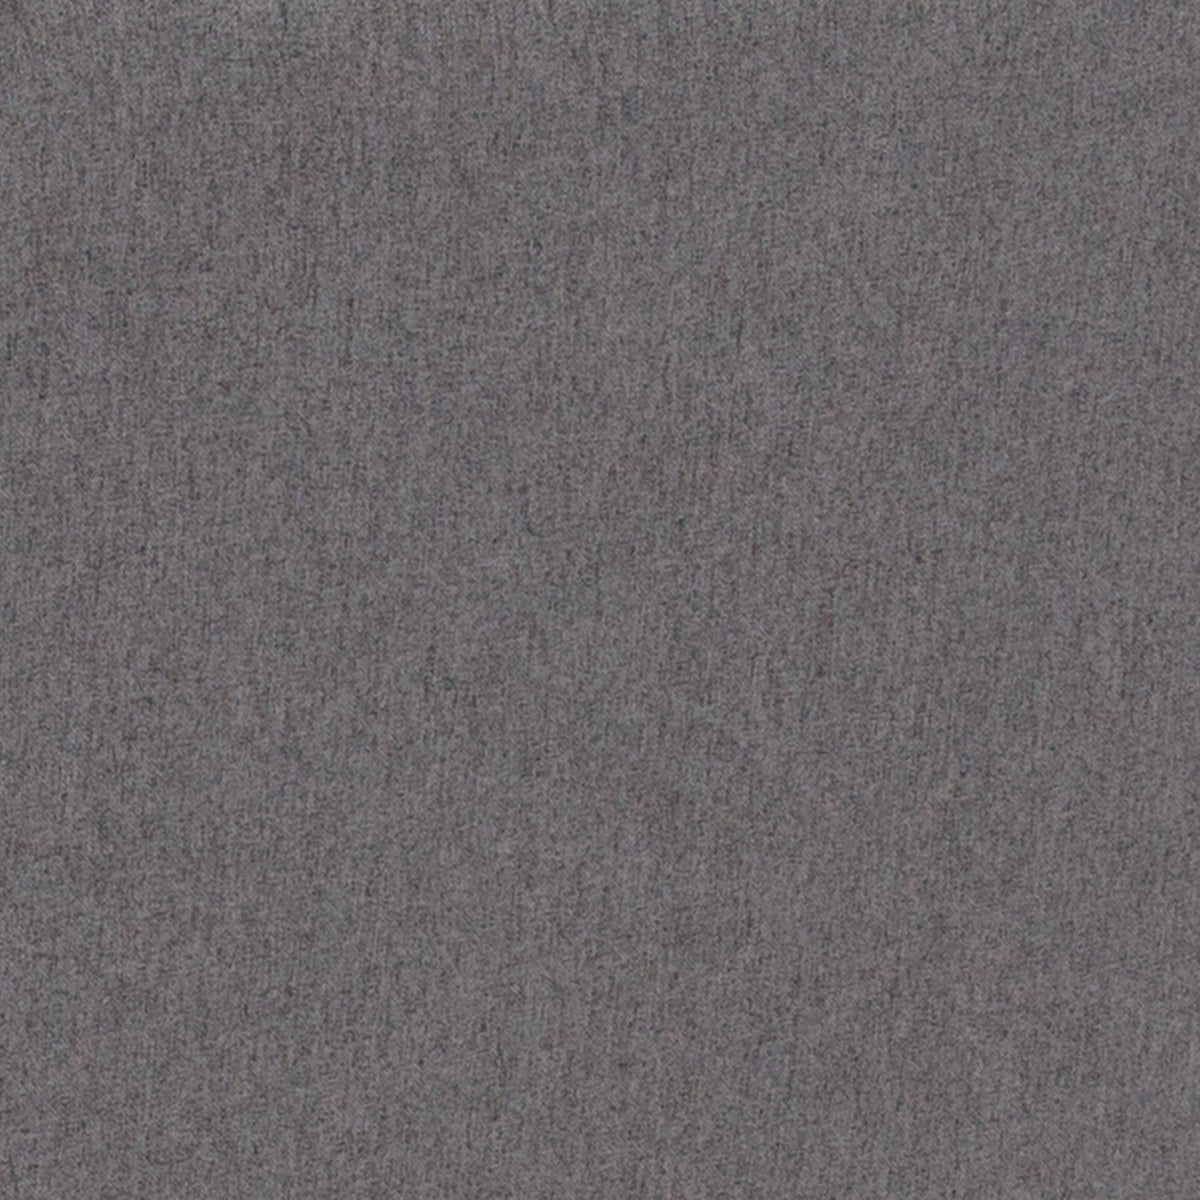 Dark Gray Fabric |#| 24inchH Walnut Counter Stool with Accent Nail Trim - Dark Gray Fabric, Set of 2